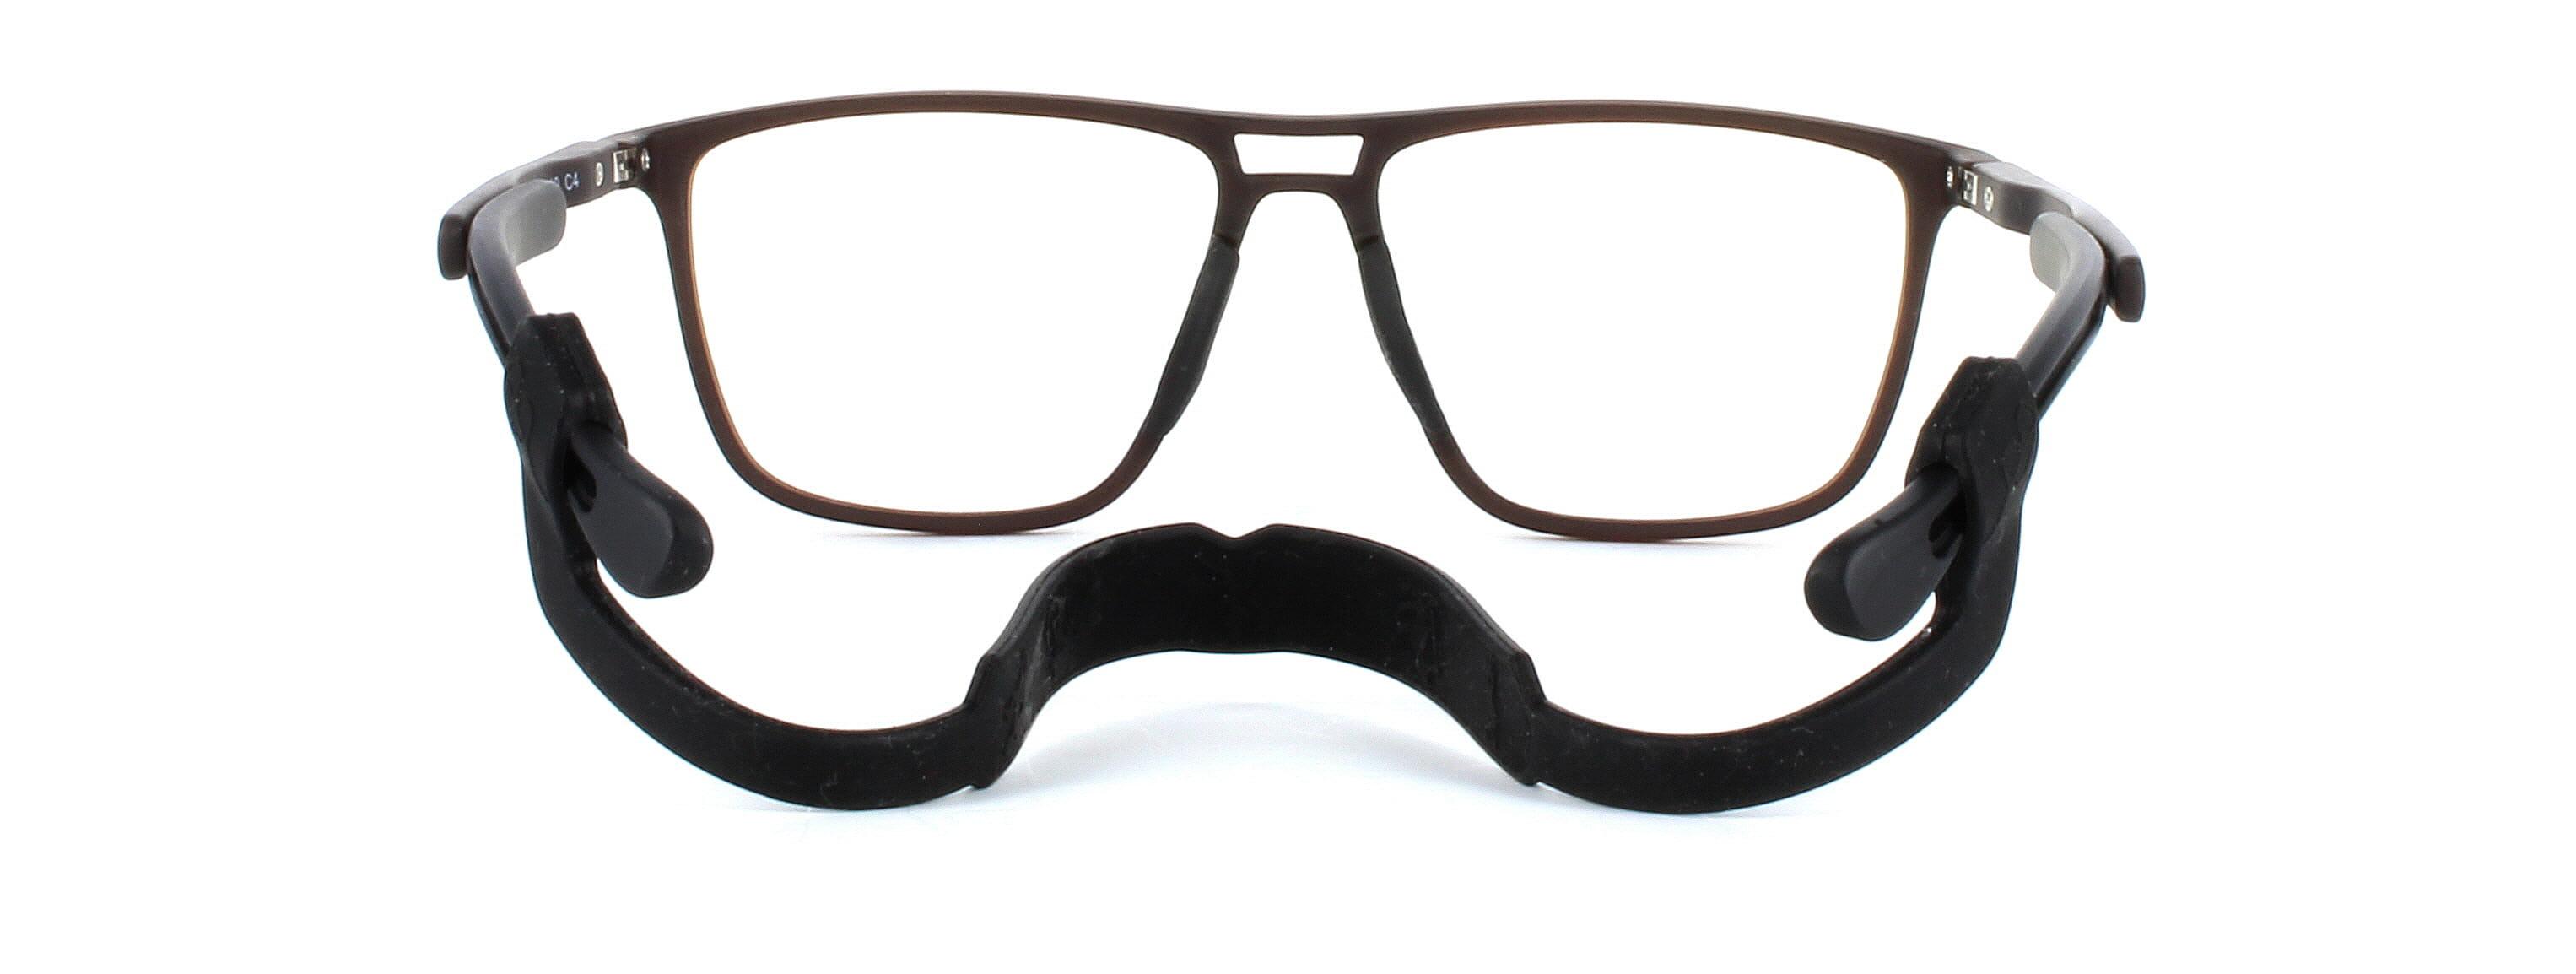 Decathlon - Men's prescription sports glasses frame in brown - image view 3